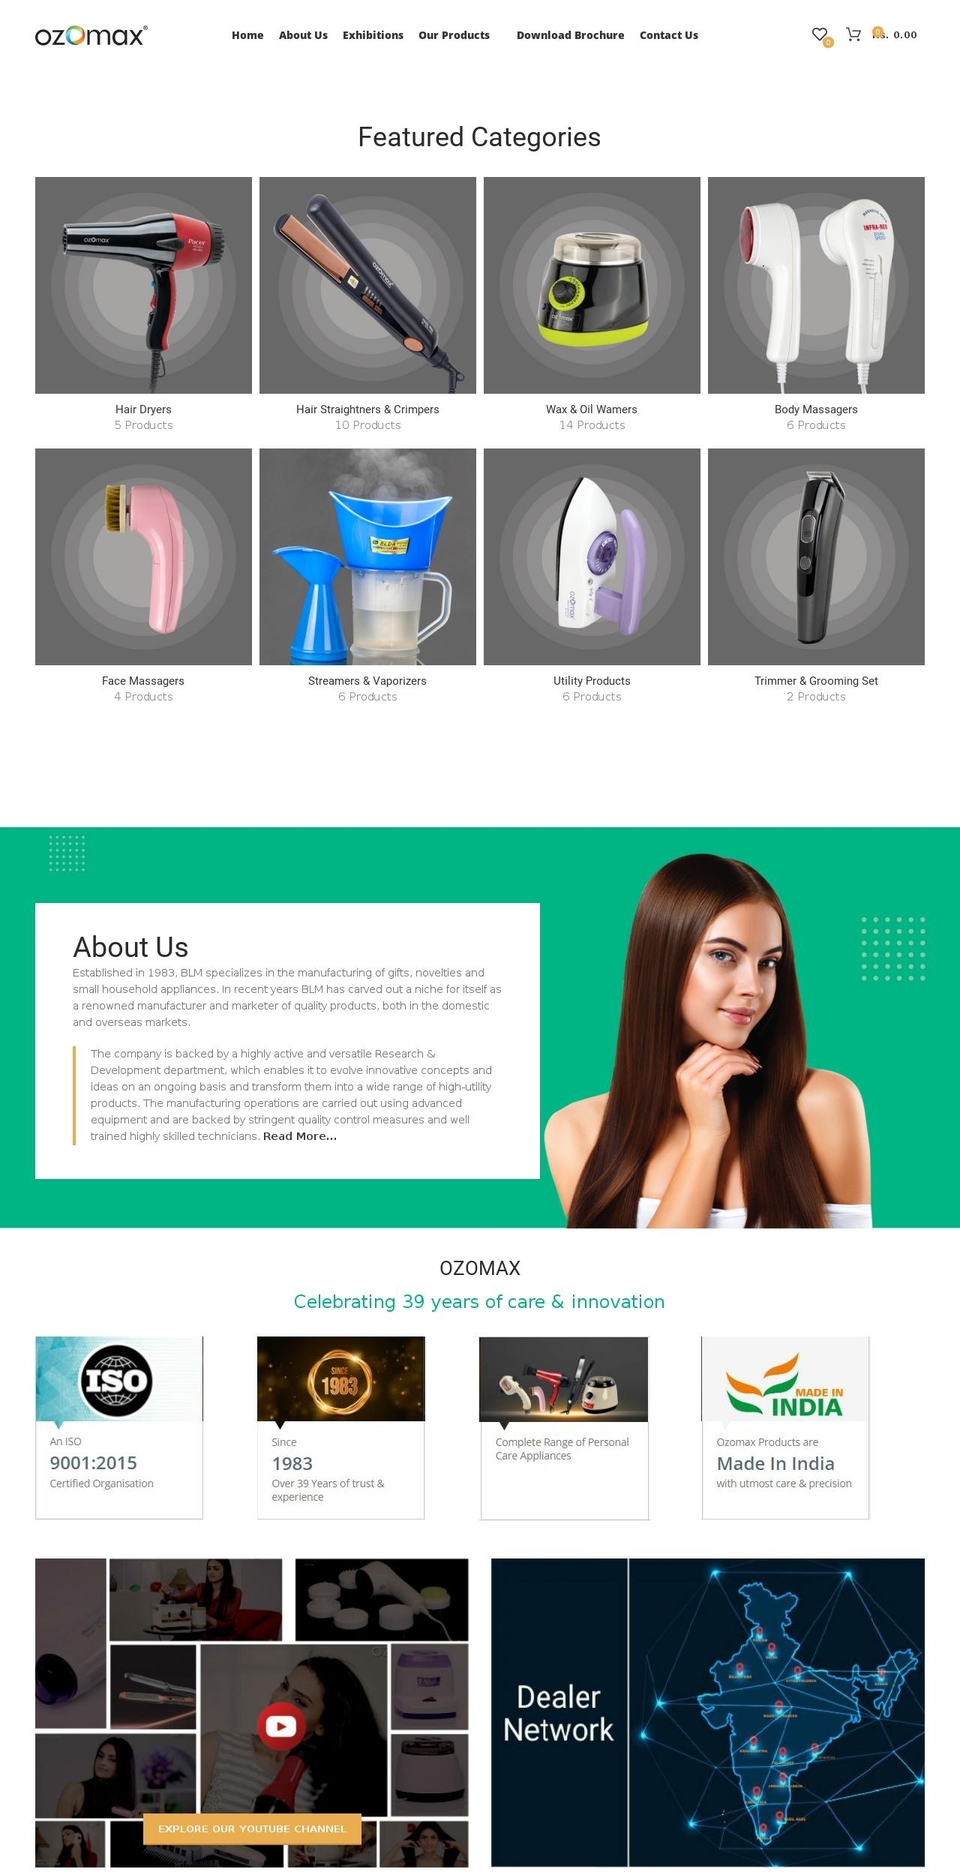 ozomax.in shopify website screenshot